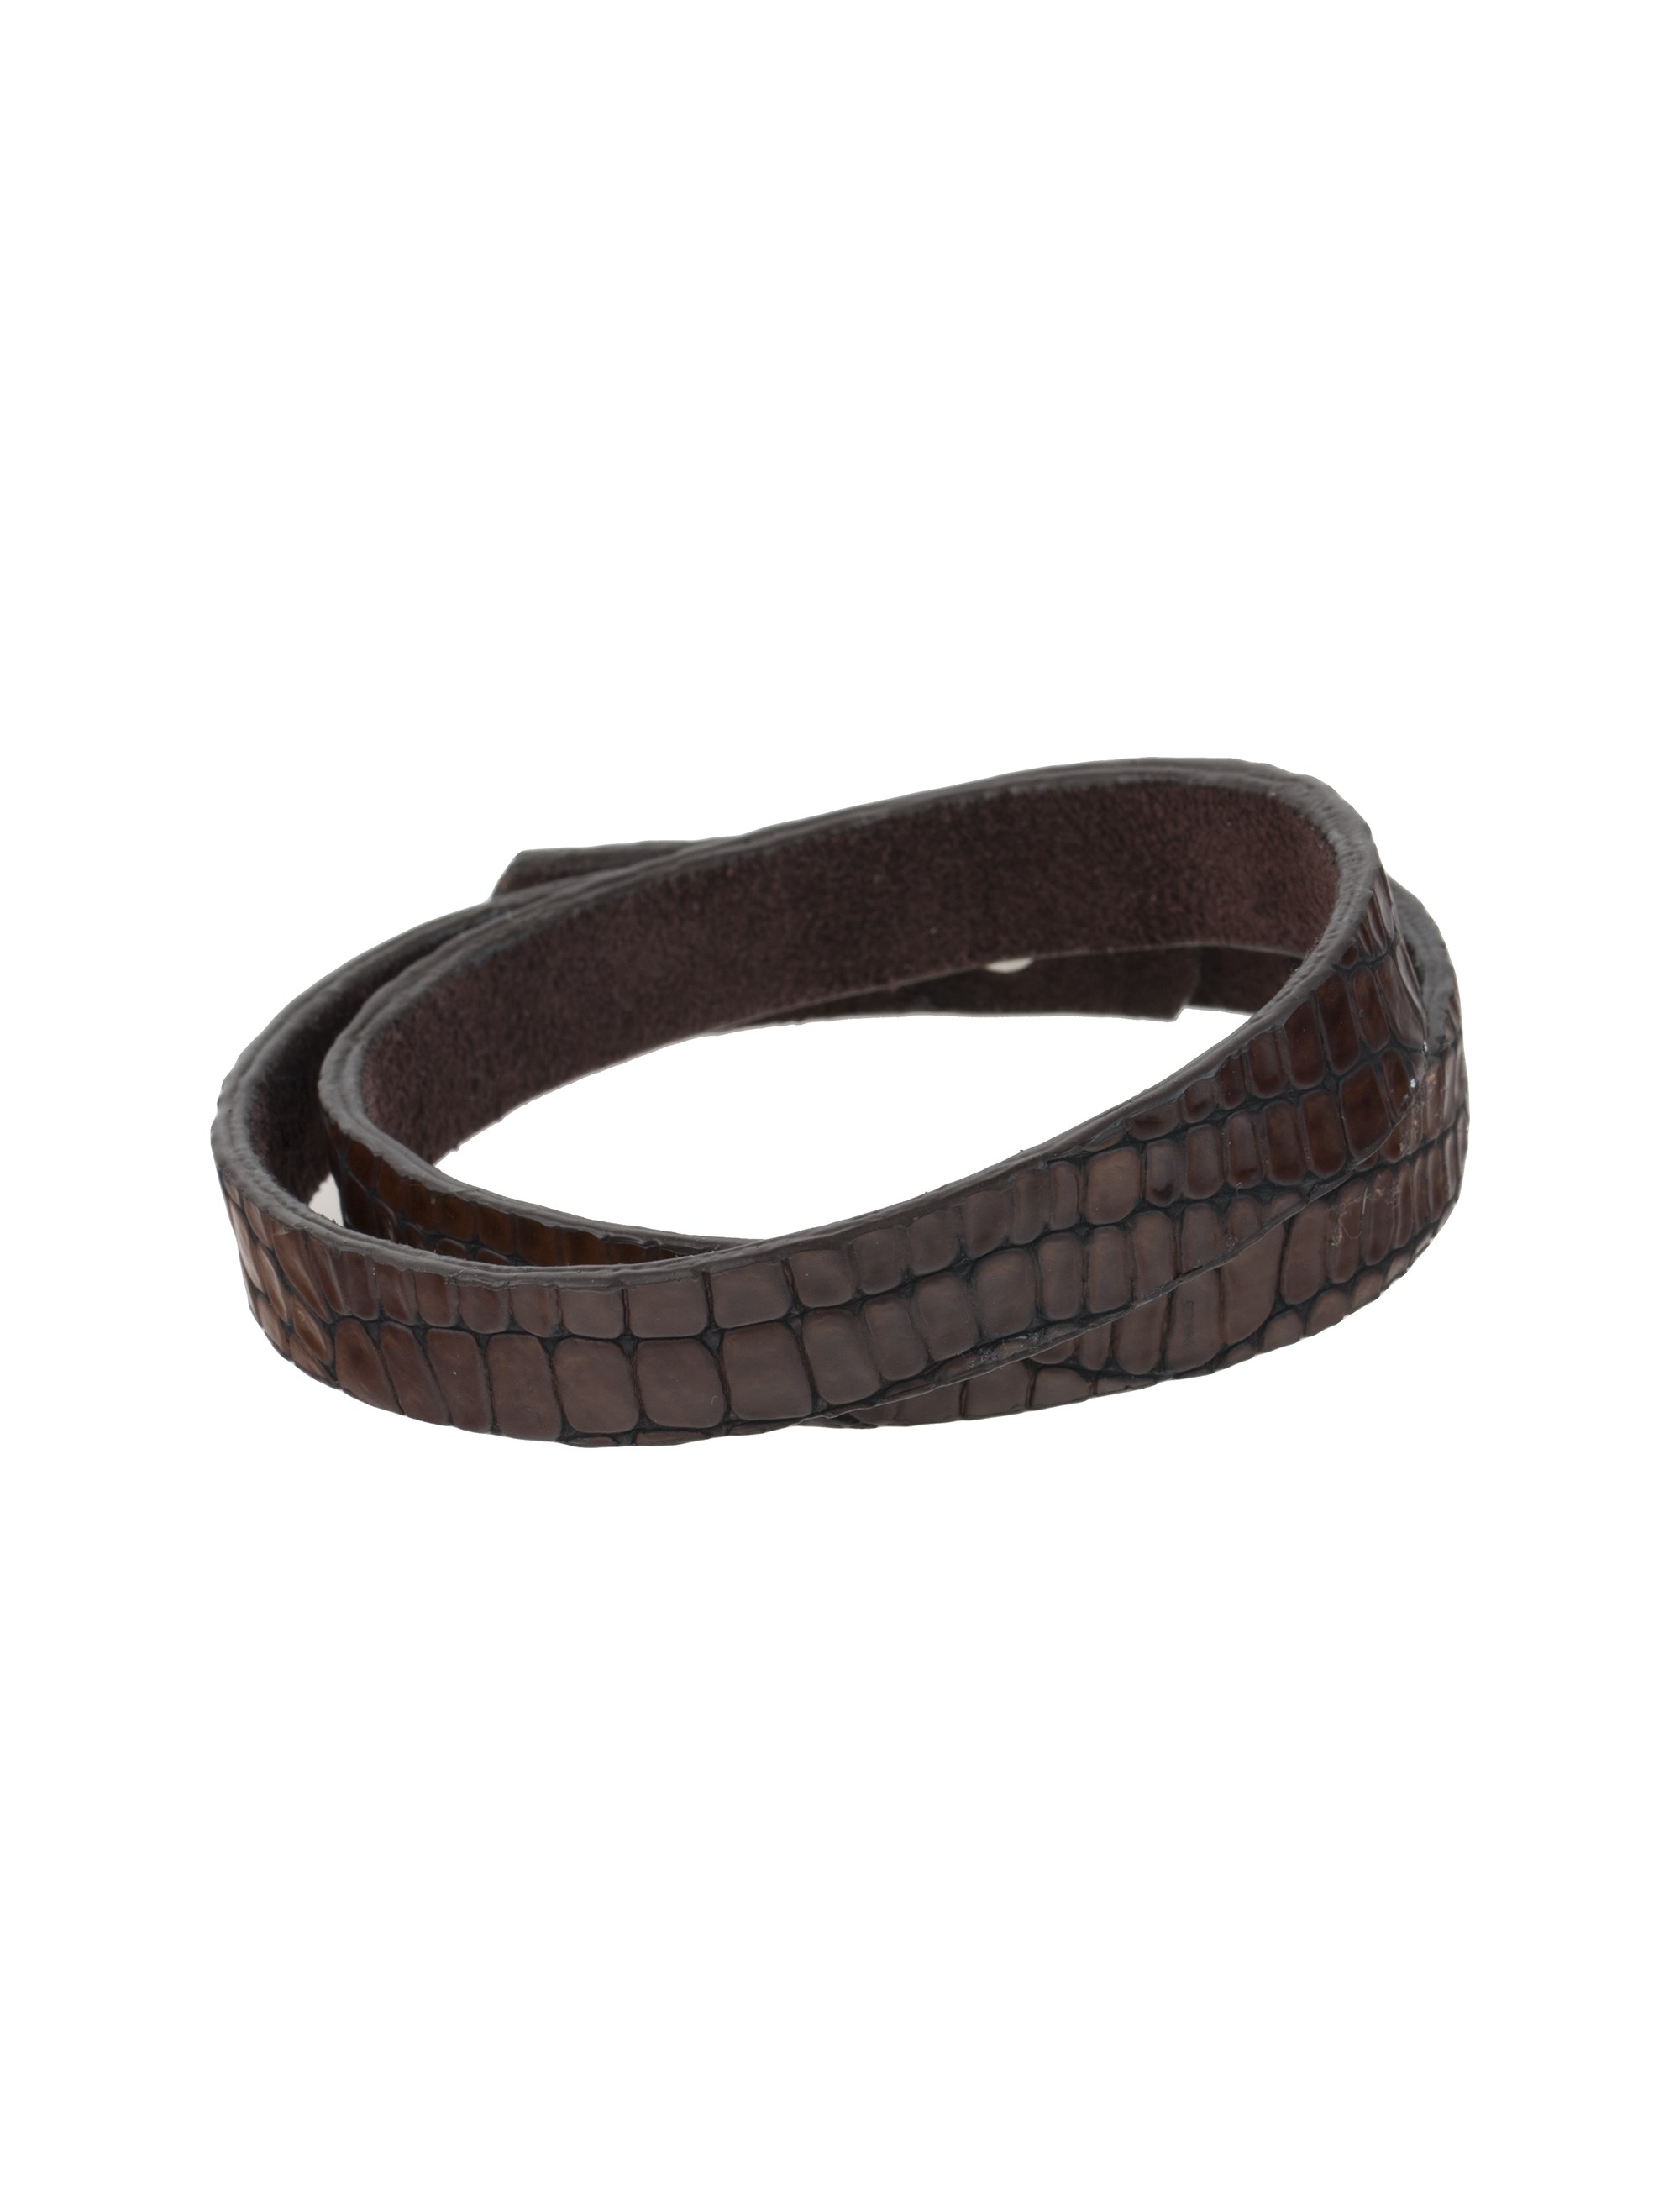 دستبند چرم مردانه - ماکو دیزاین سایز 43 cm